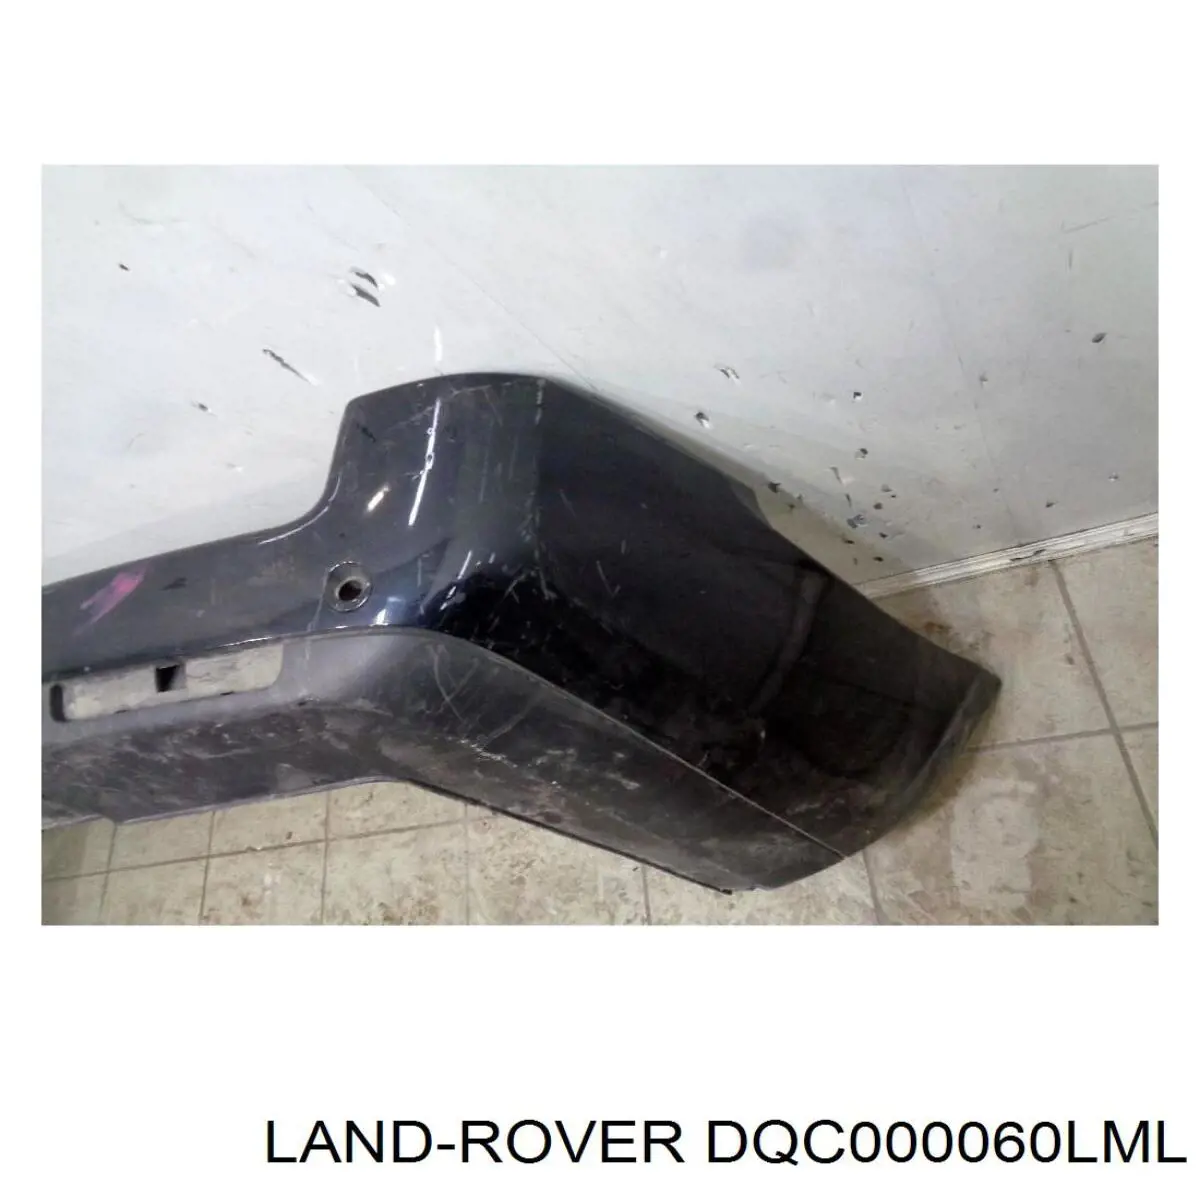 DQC000060LML Land Rover parachoques trasero